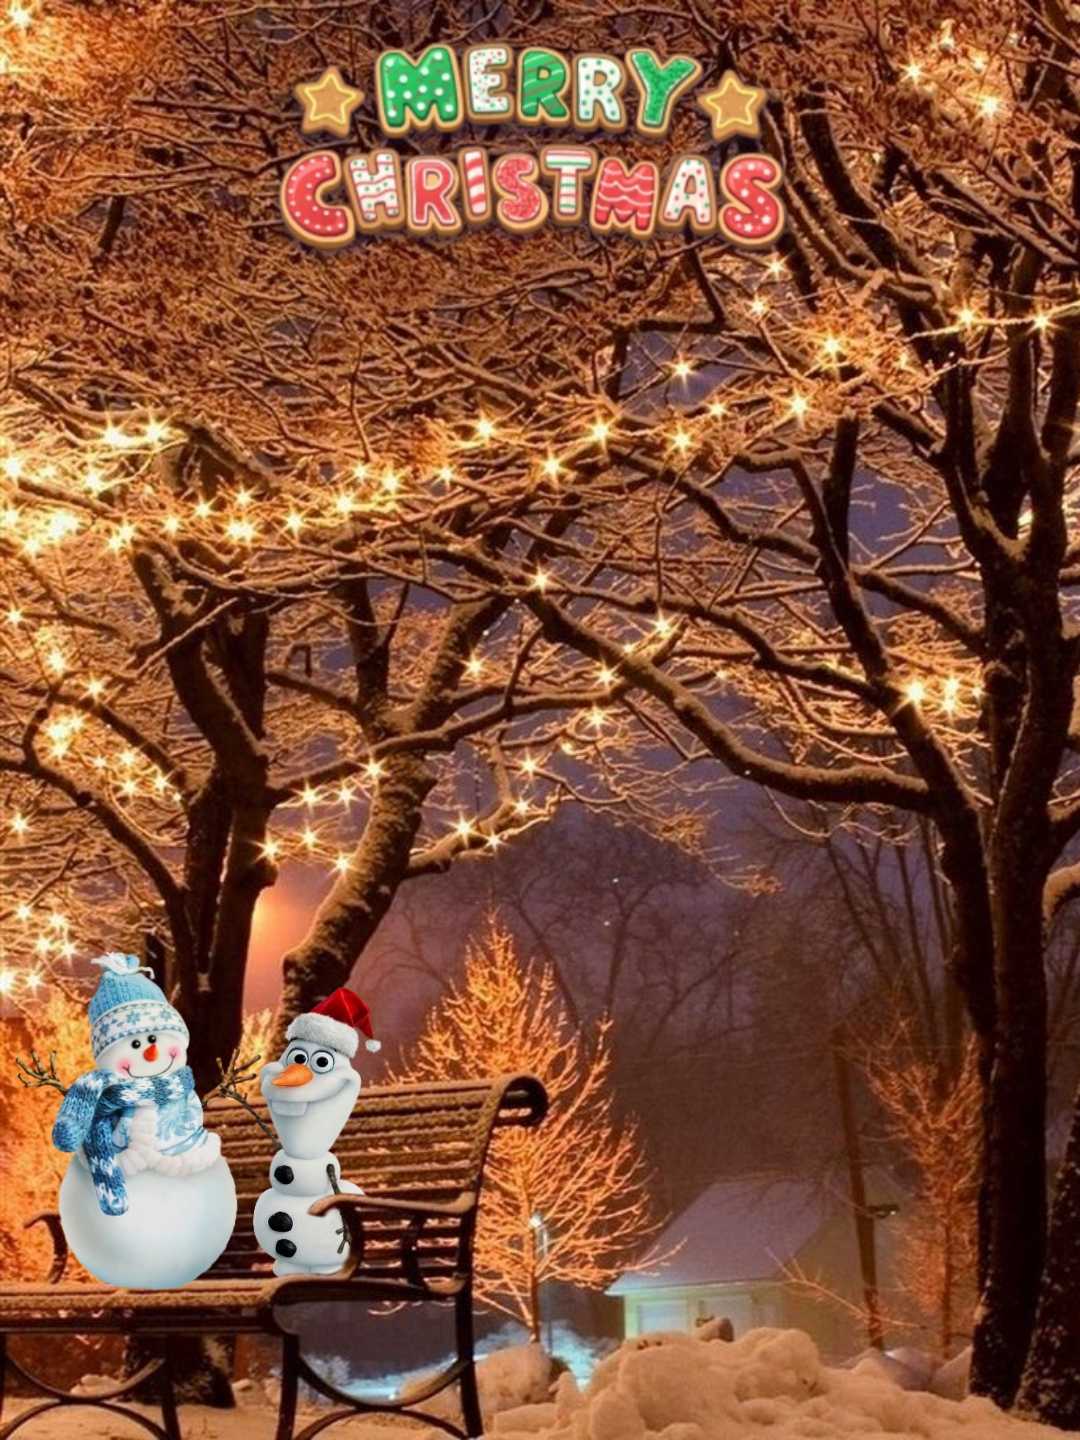 Christmas Backgrounds